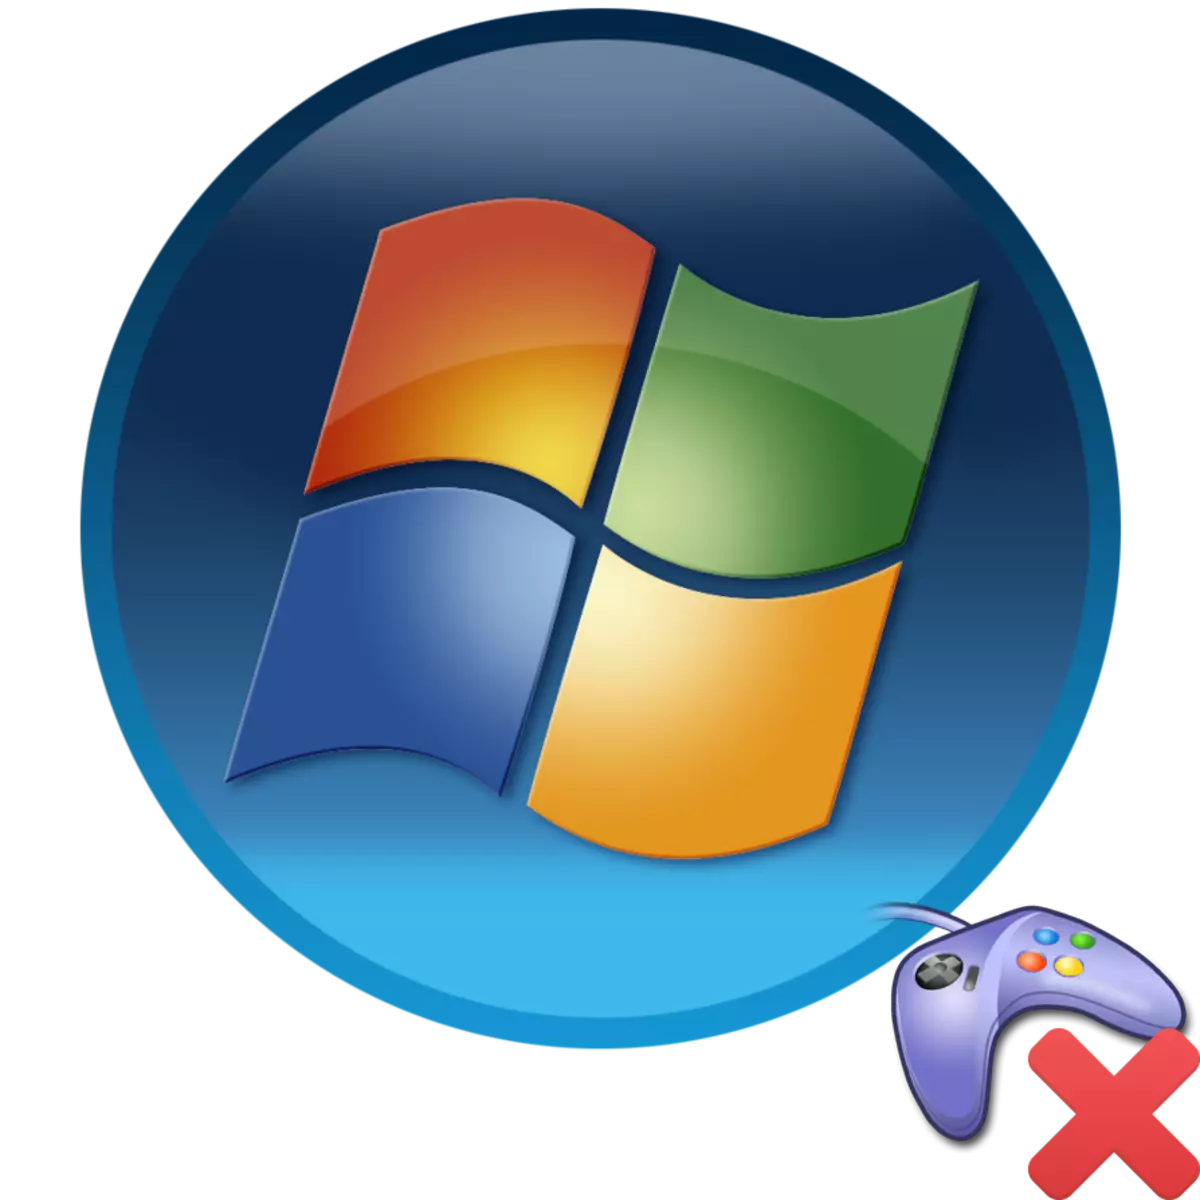 Windows 7 games do not start